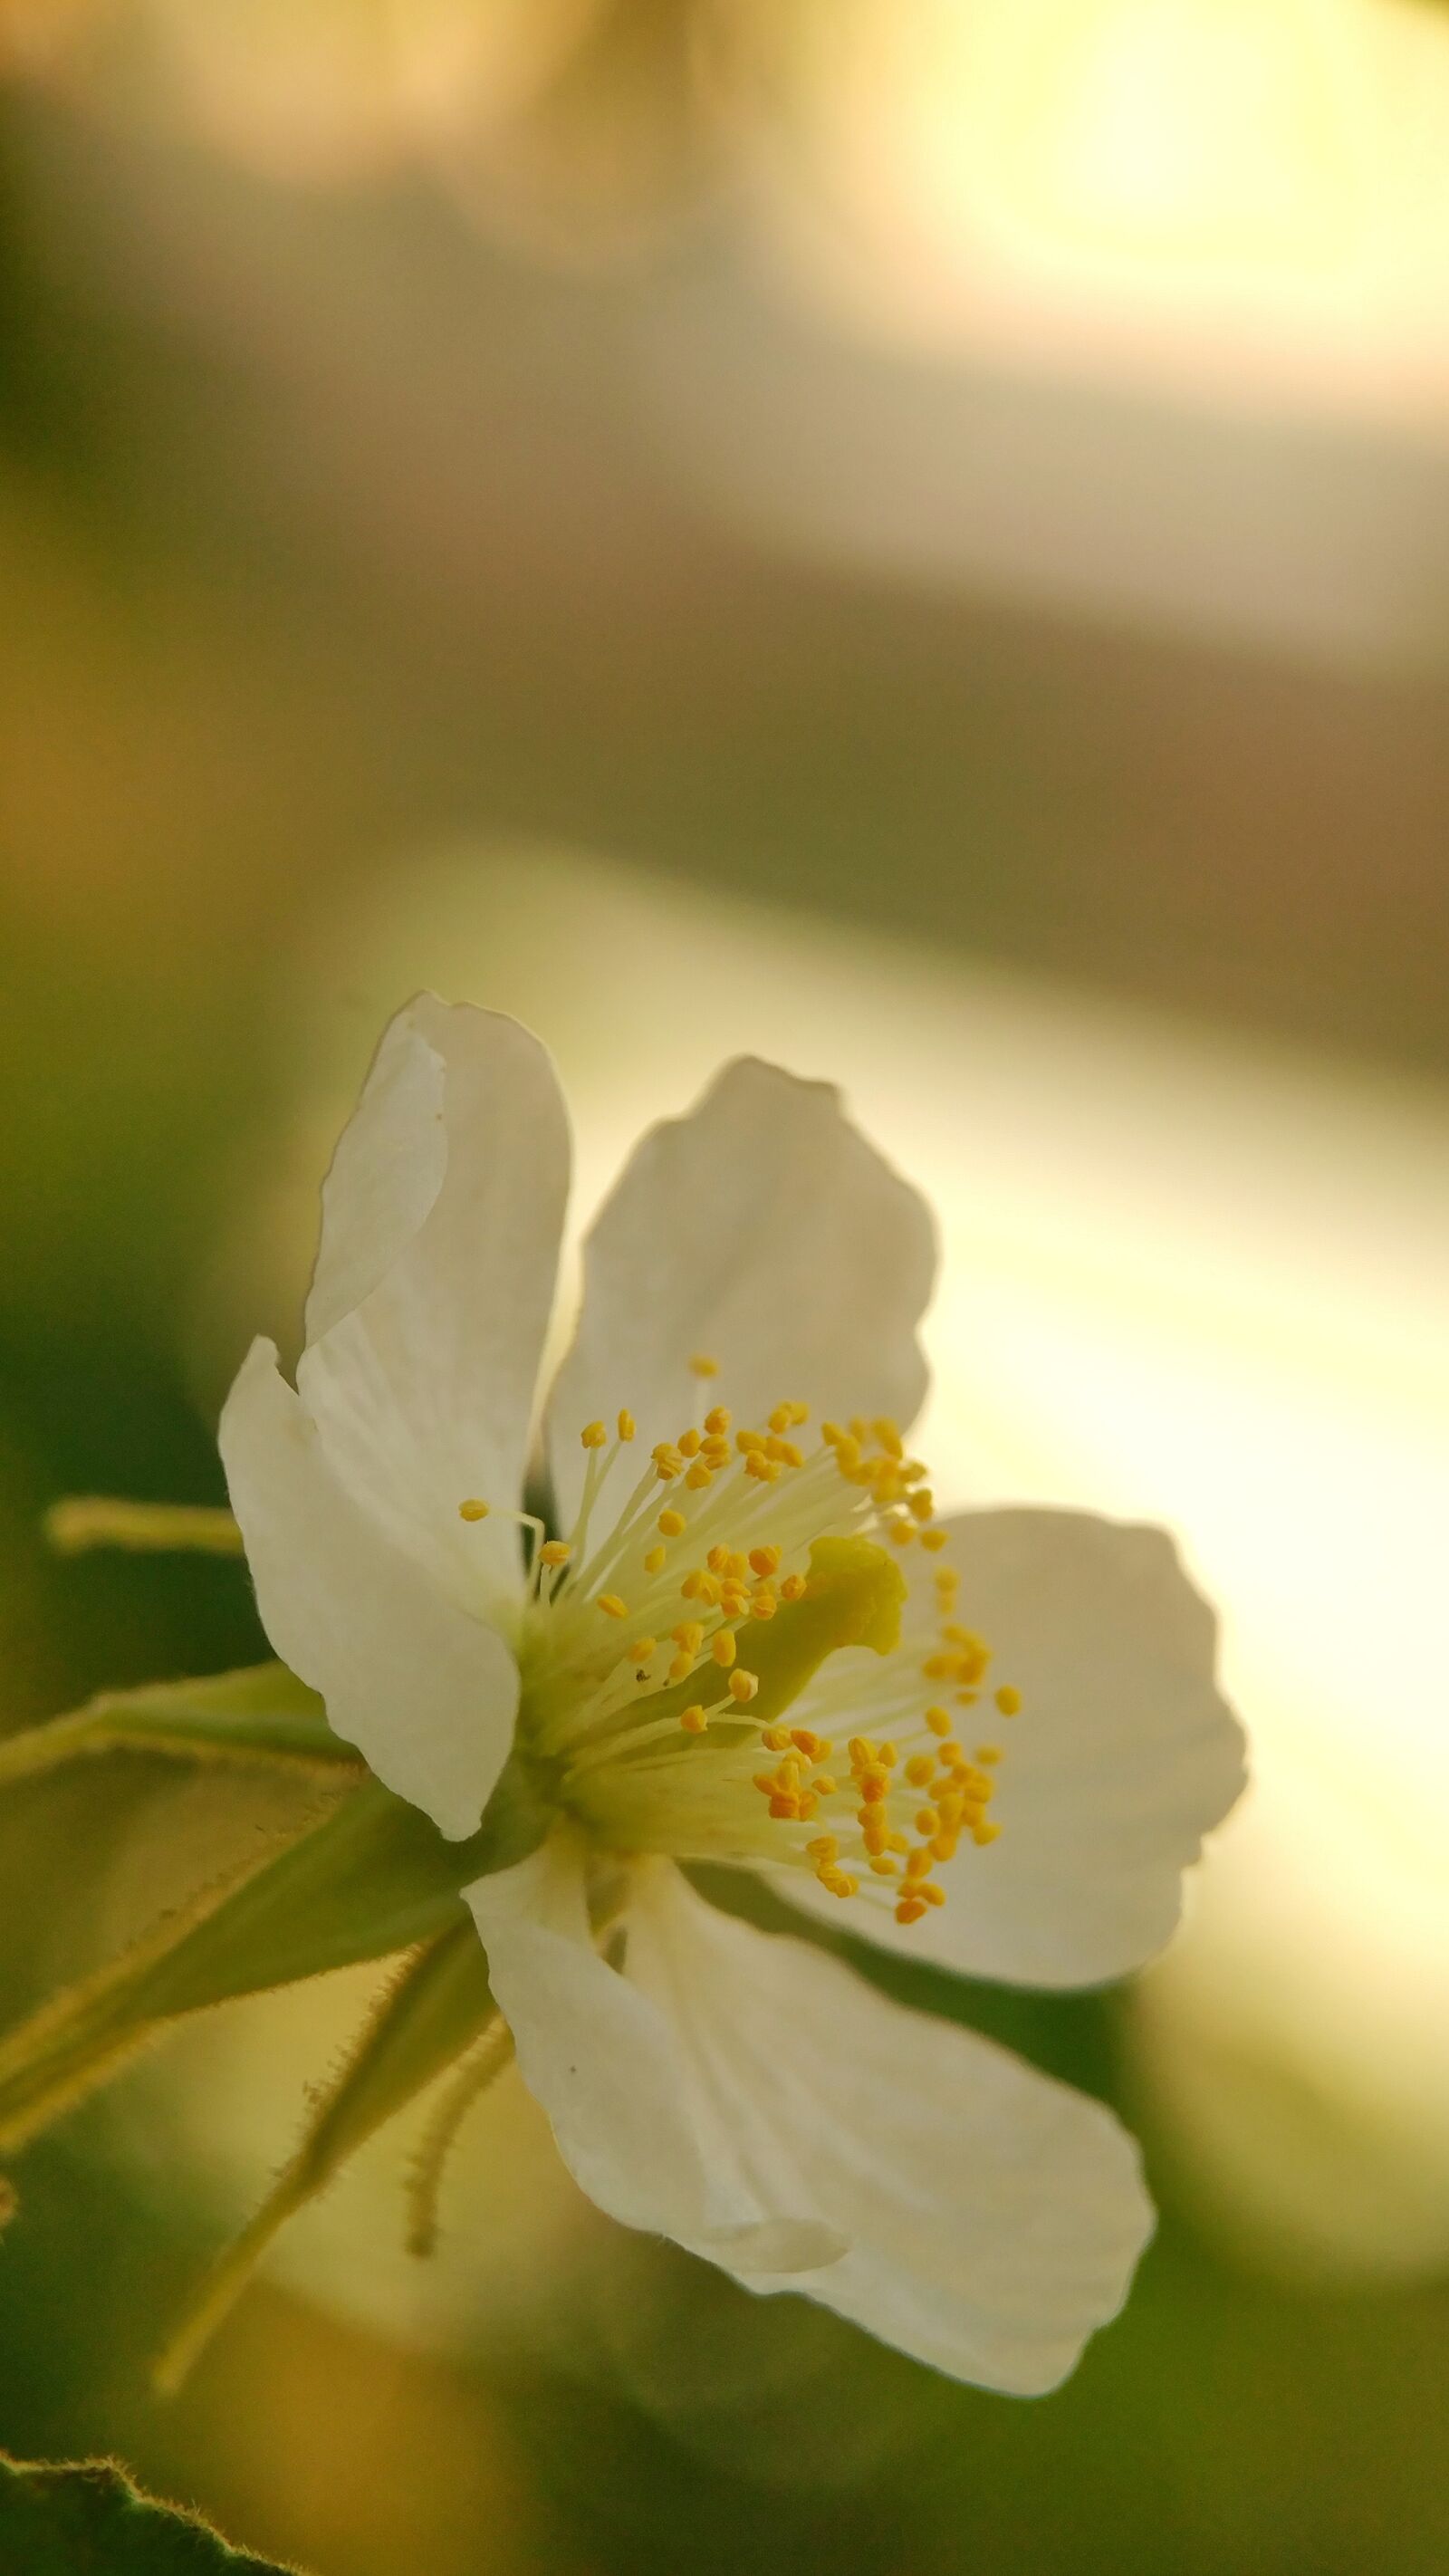 LG G5 sample photo. Flower, macro, blur photography